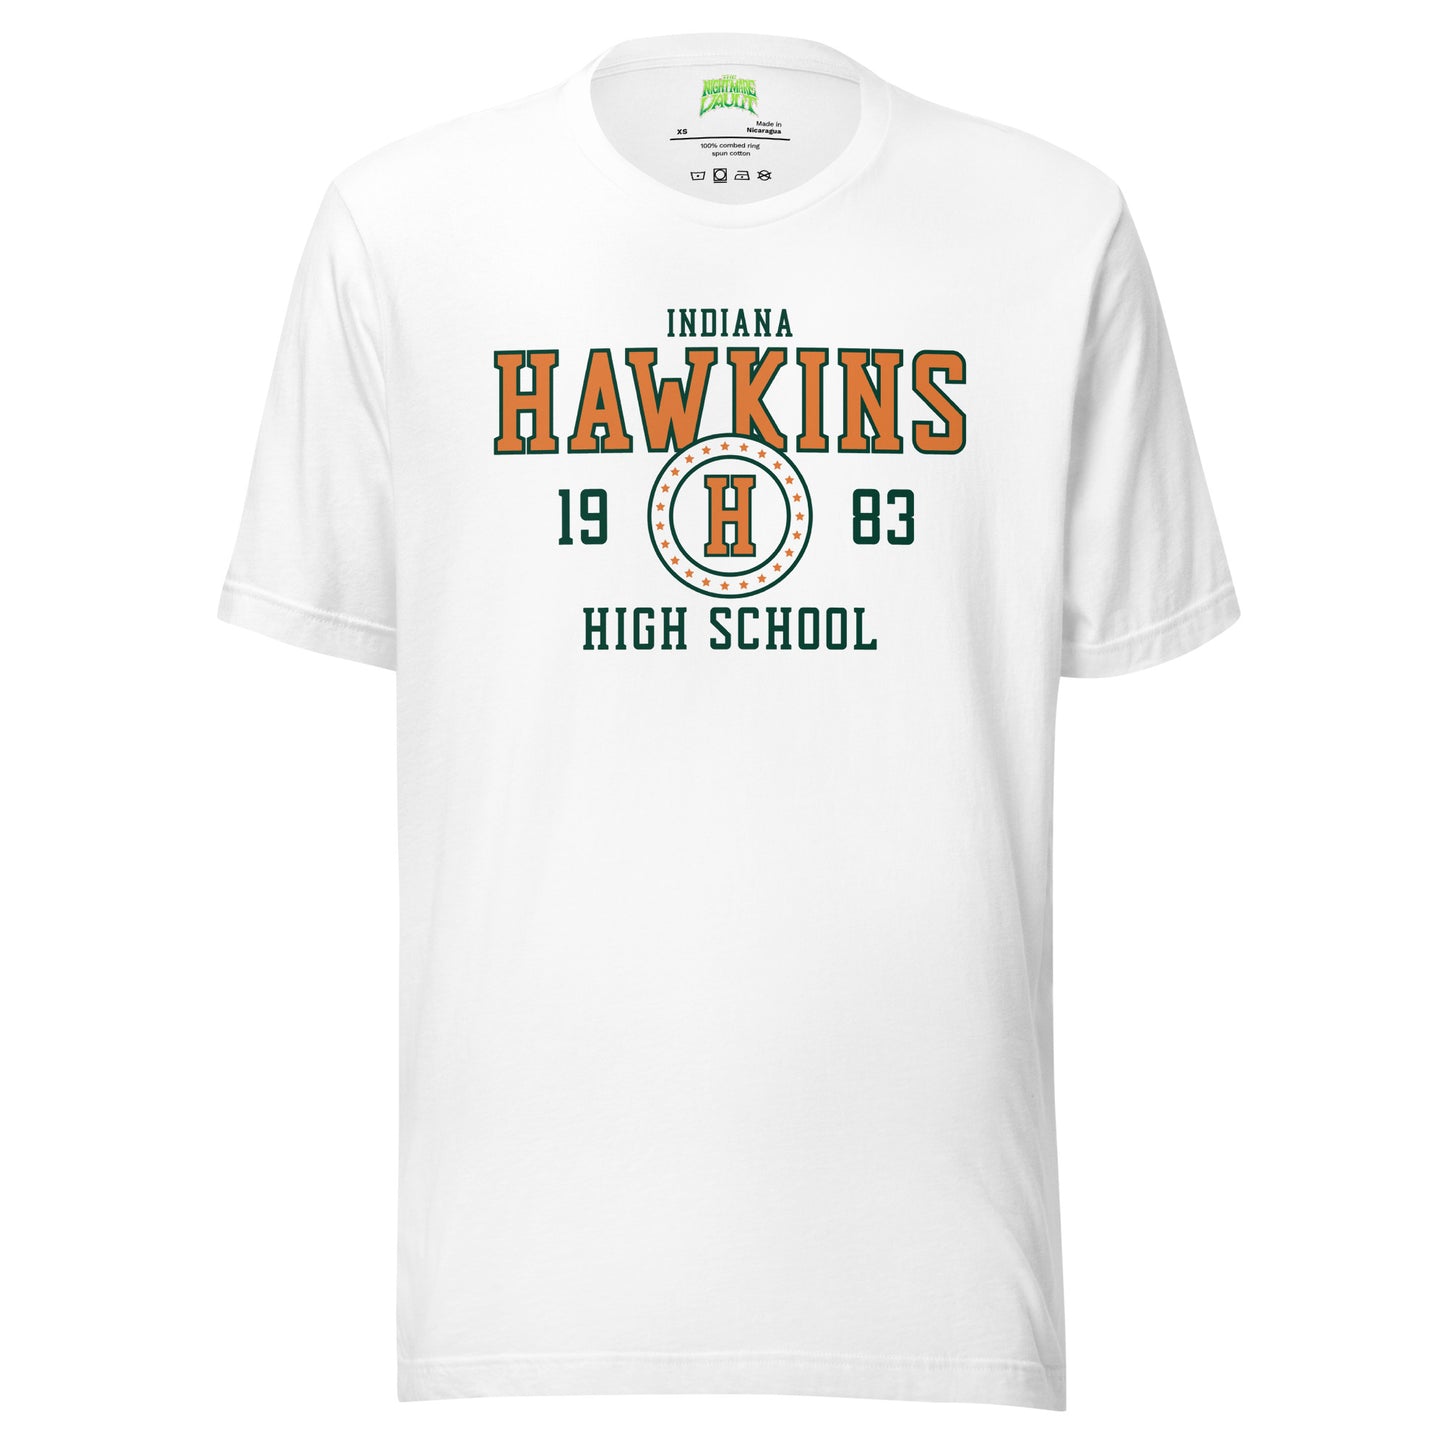 Hawkins High School Athletic Dept tee